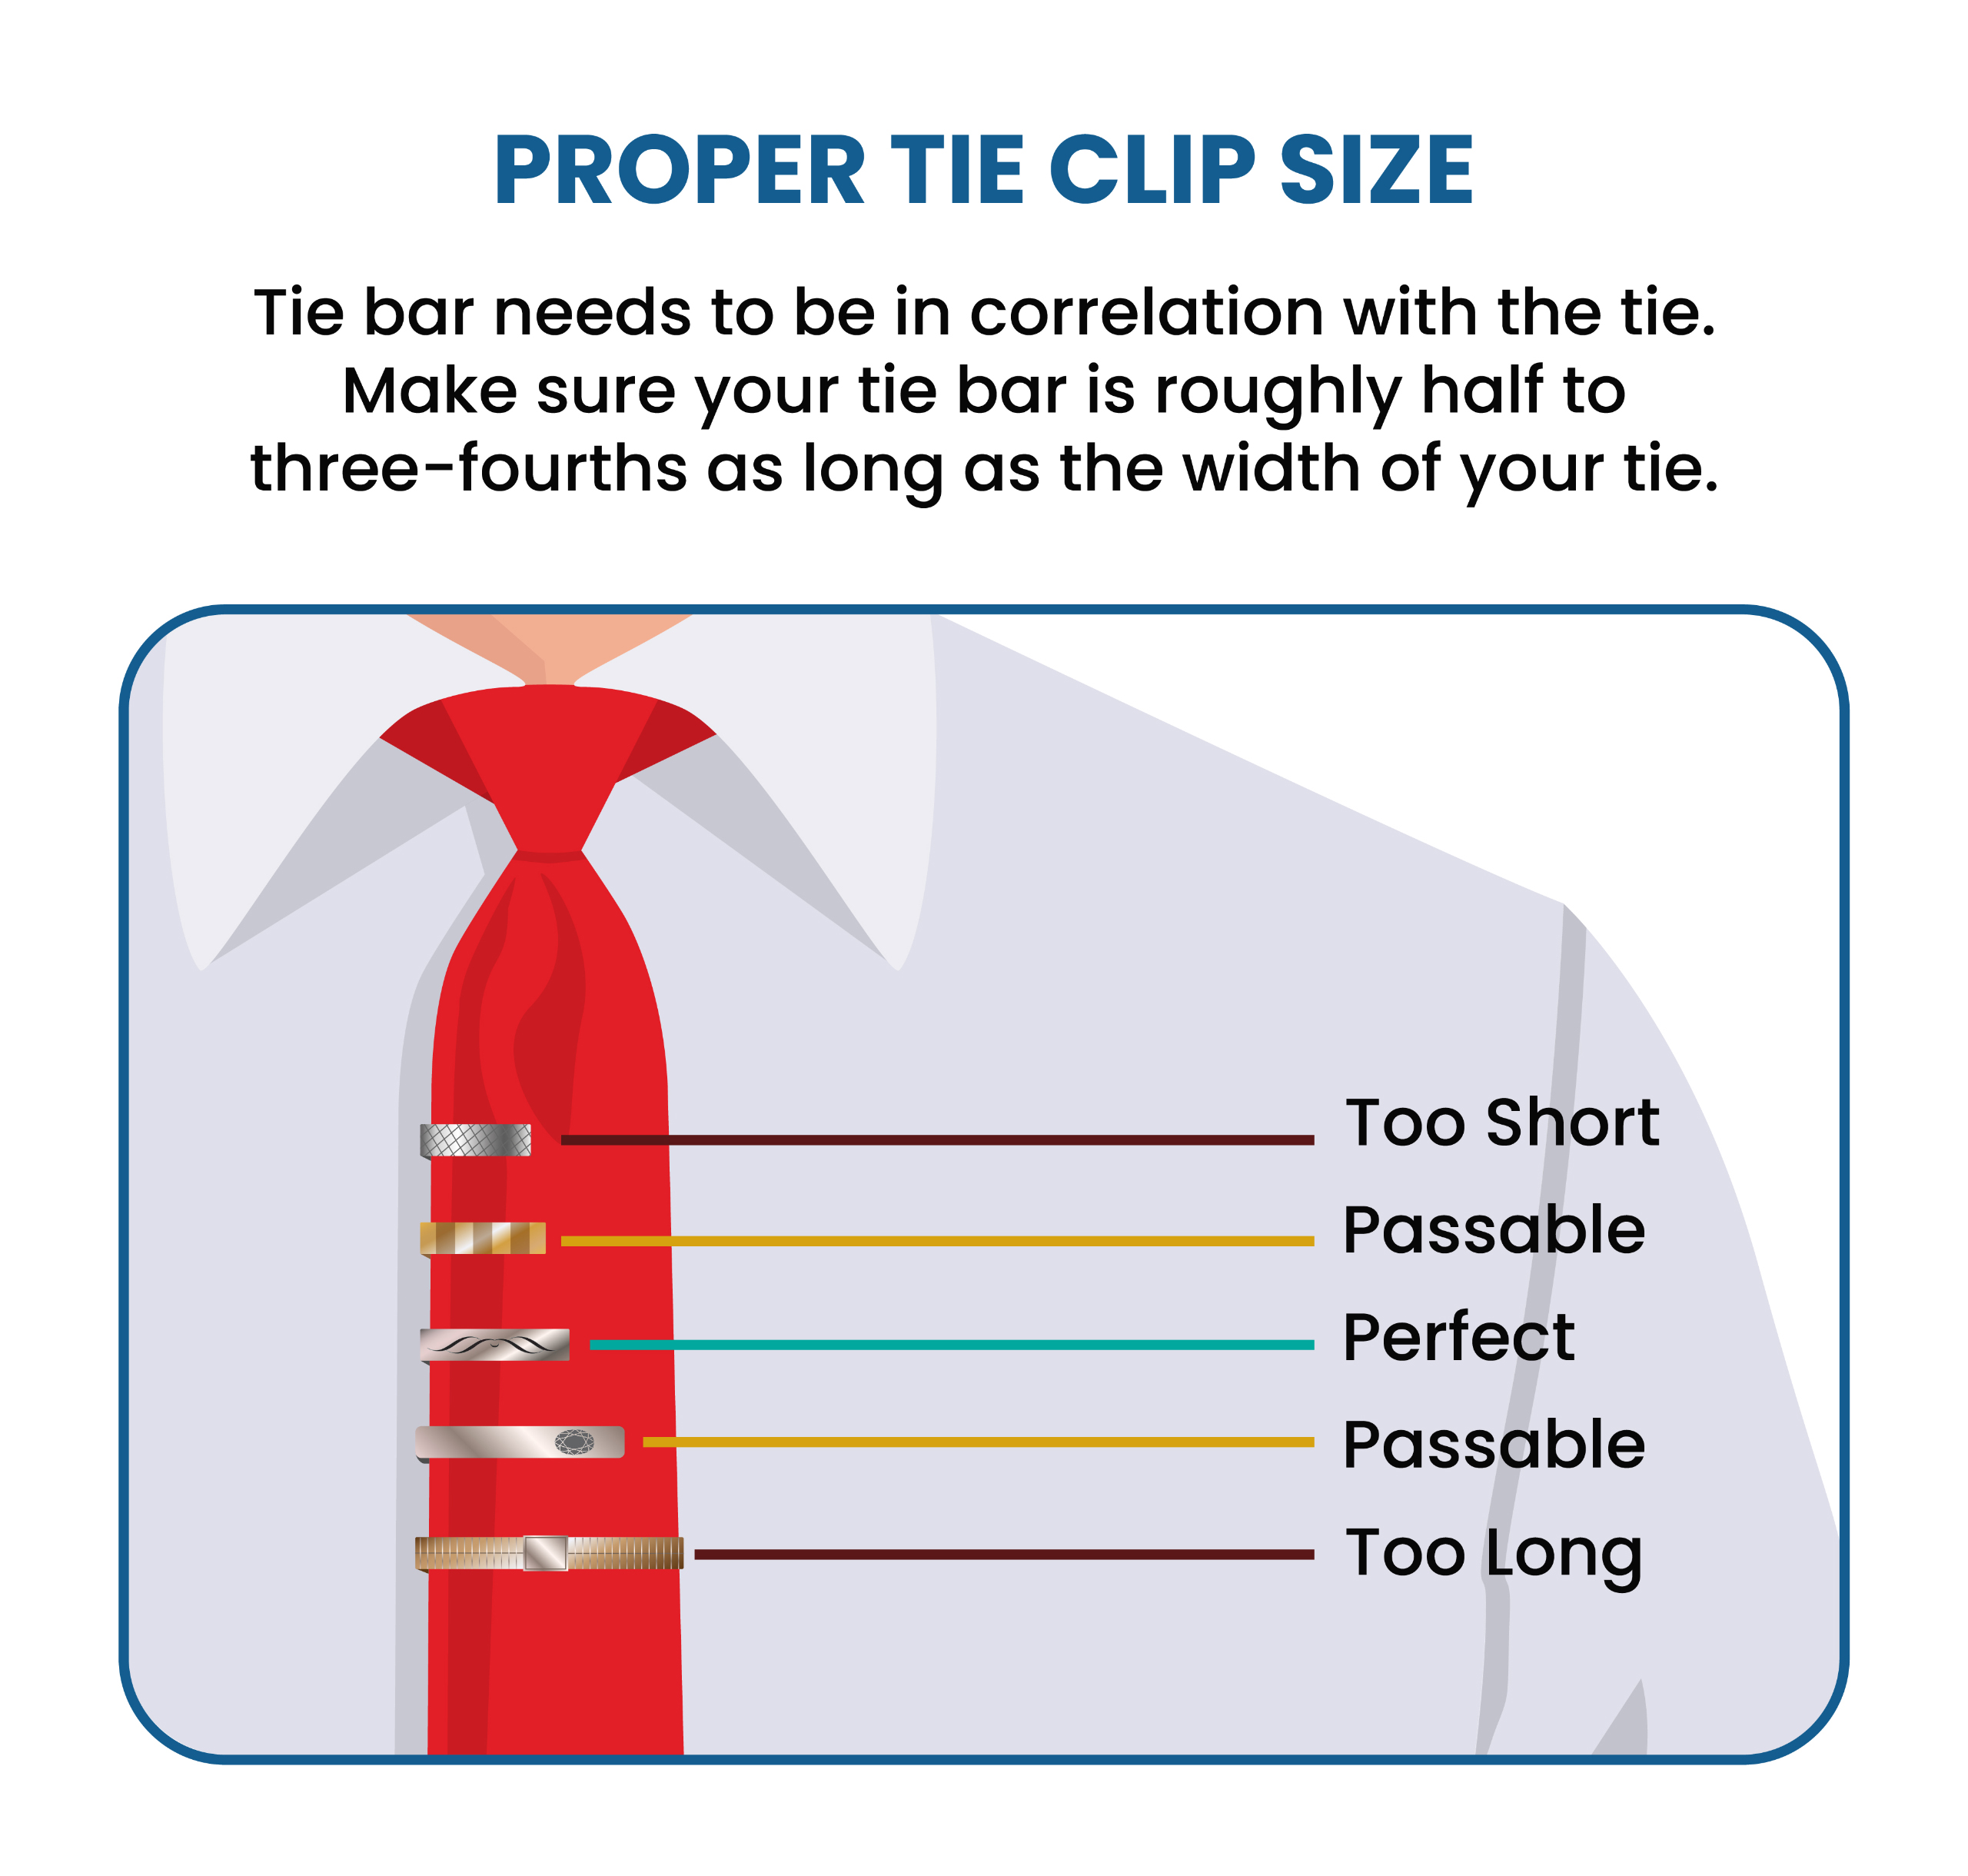 proper tie clip and tie bar size